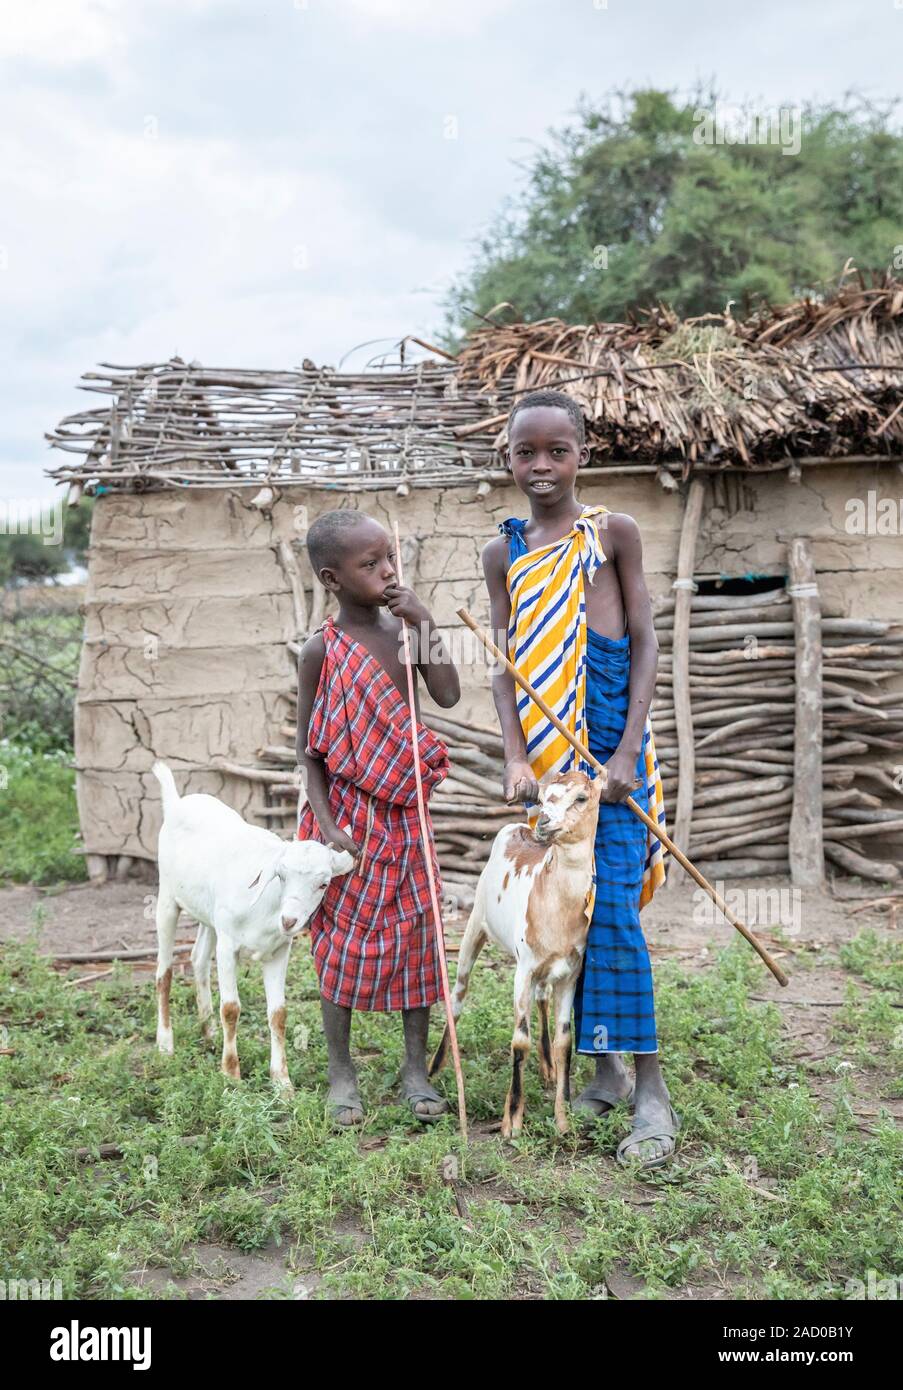 Same, Tanzania, 7th June 2019: maasai kid with a goat Stock Photo